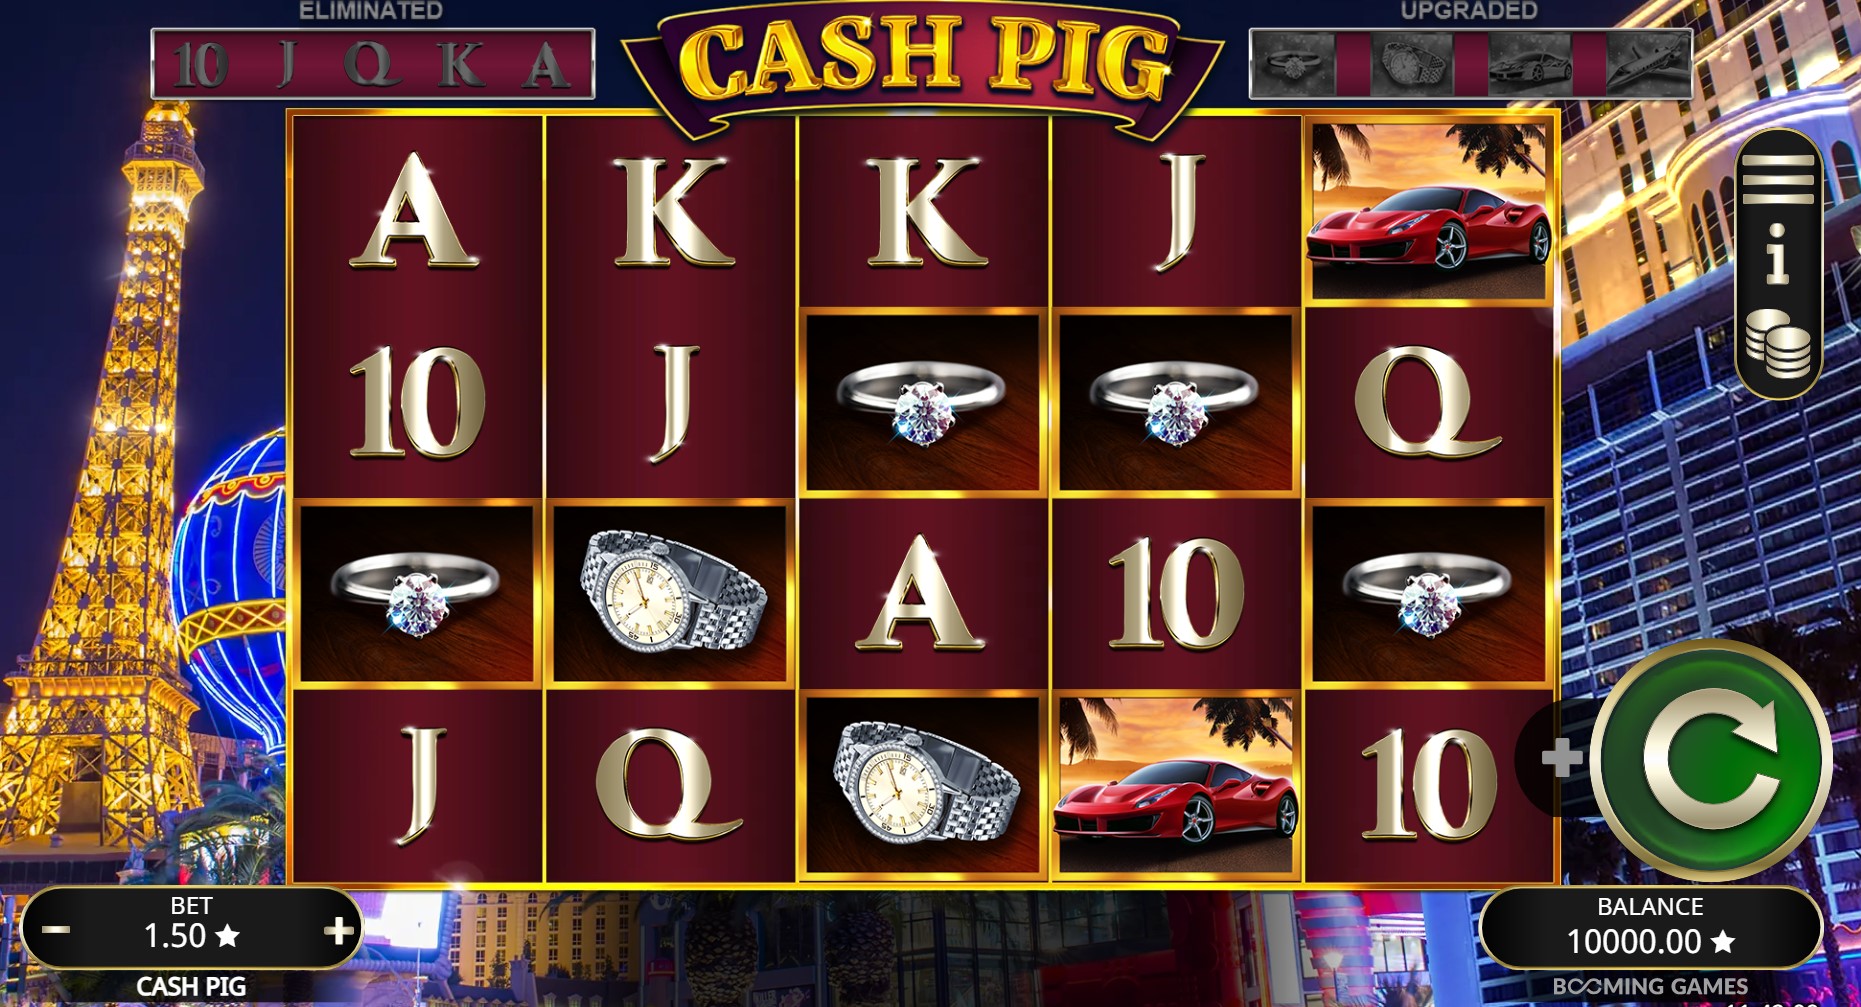 Cash Pig slot